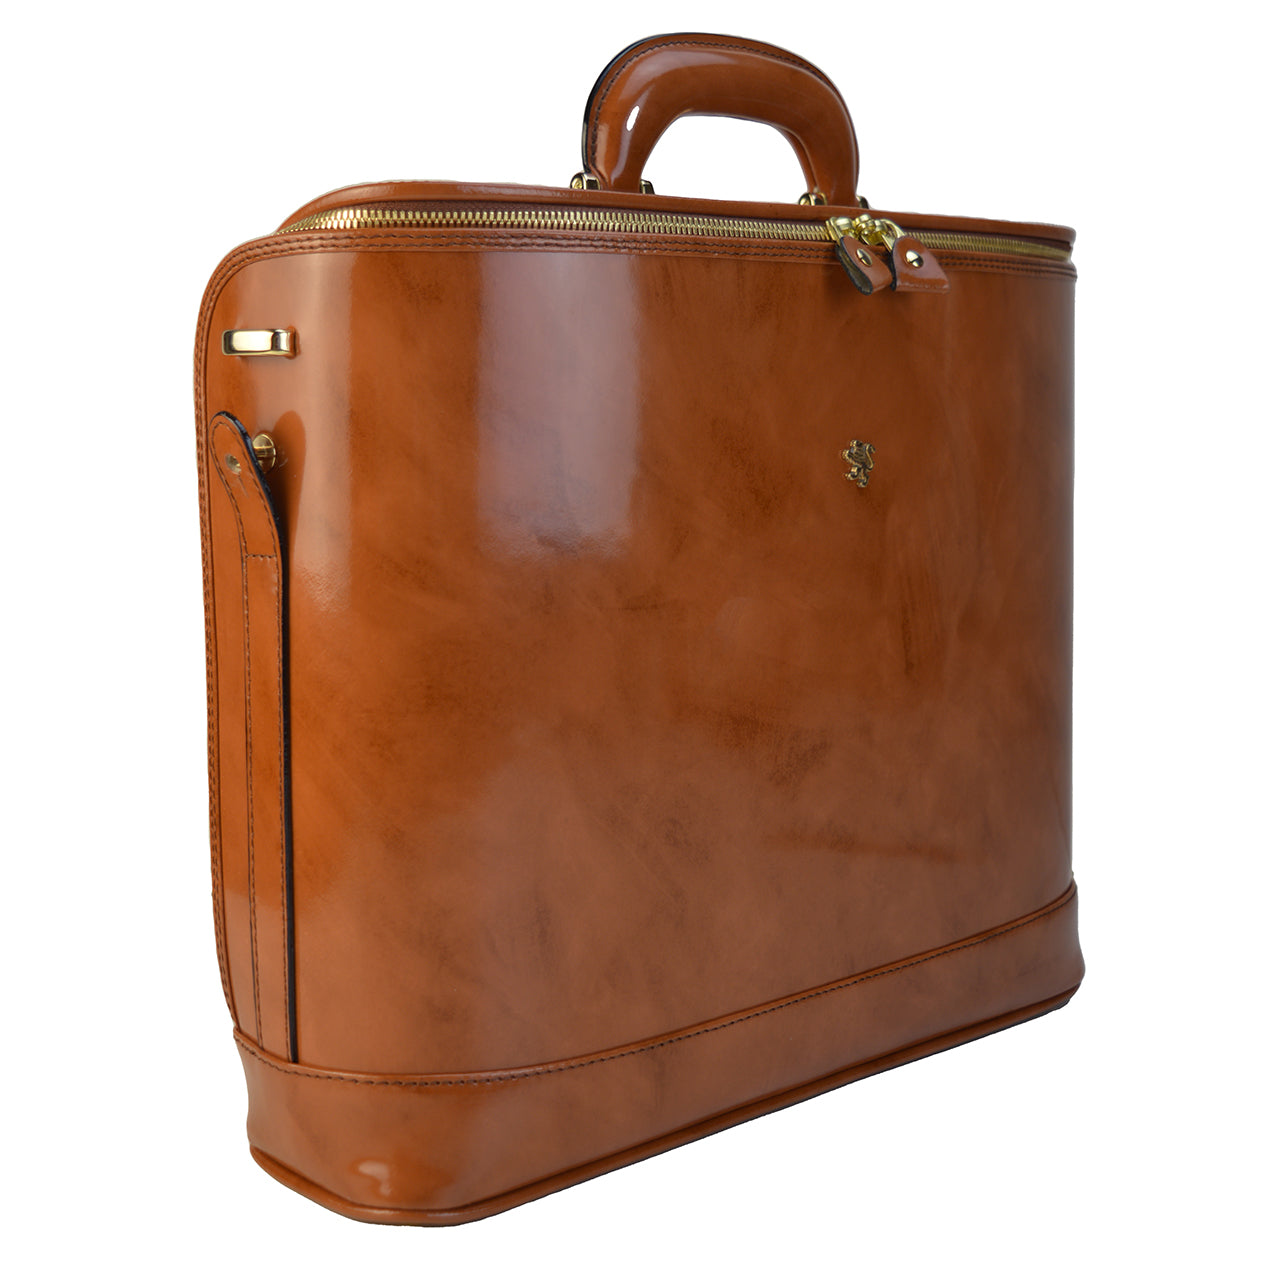 Pratesi Raffaello Laptop Bag 15 in genuine Italian leather